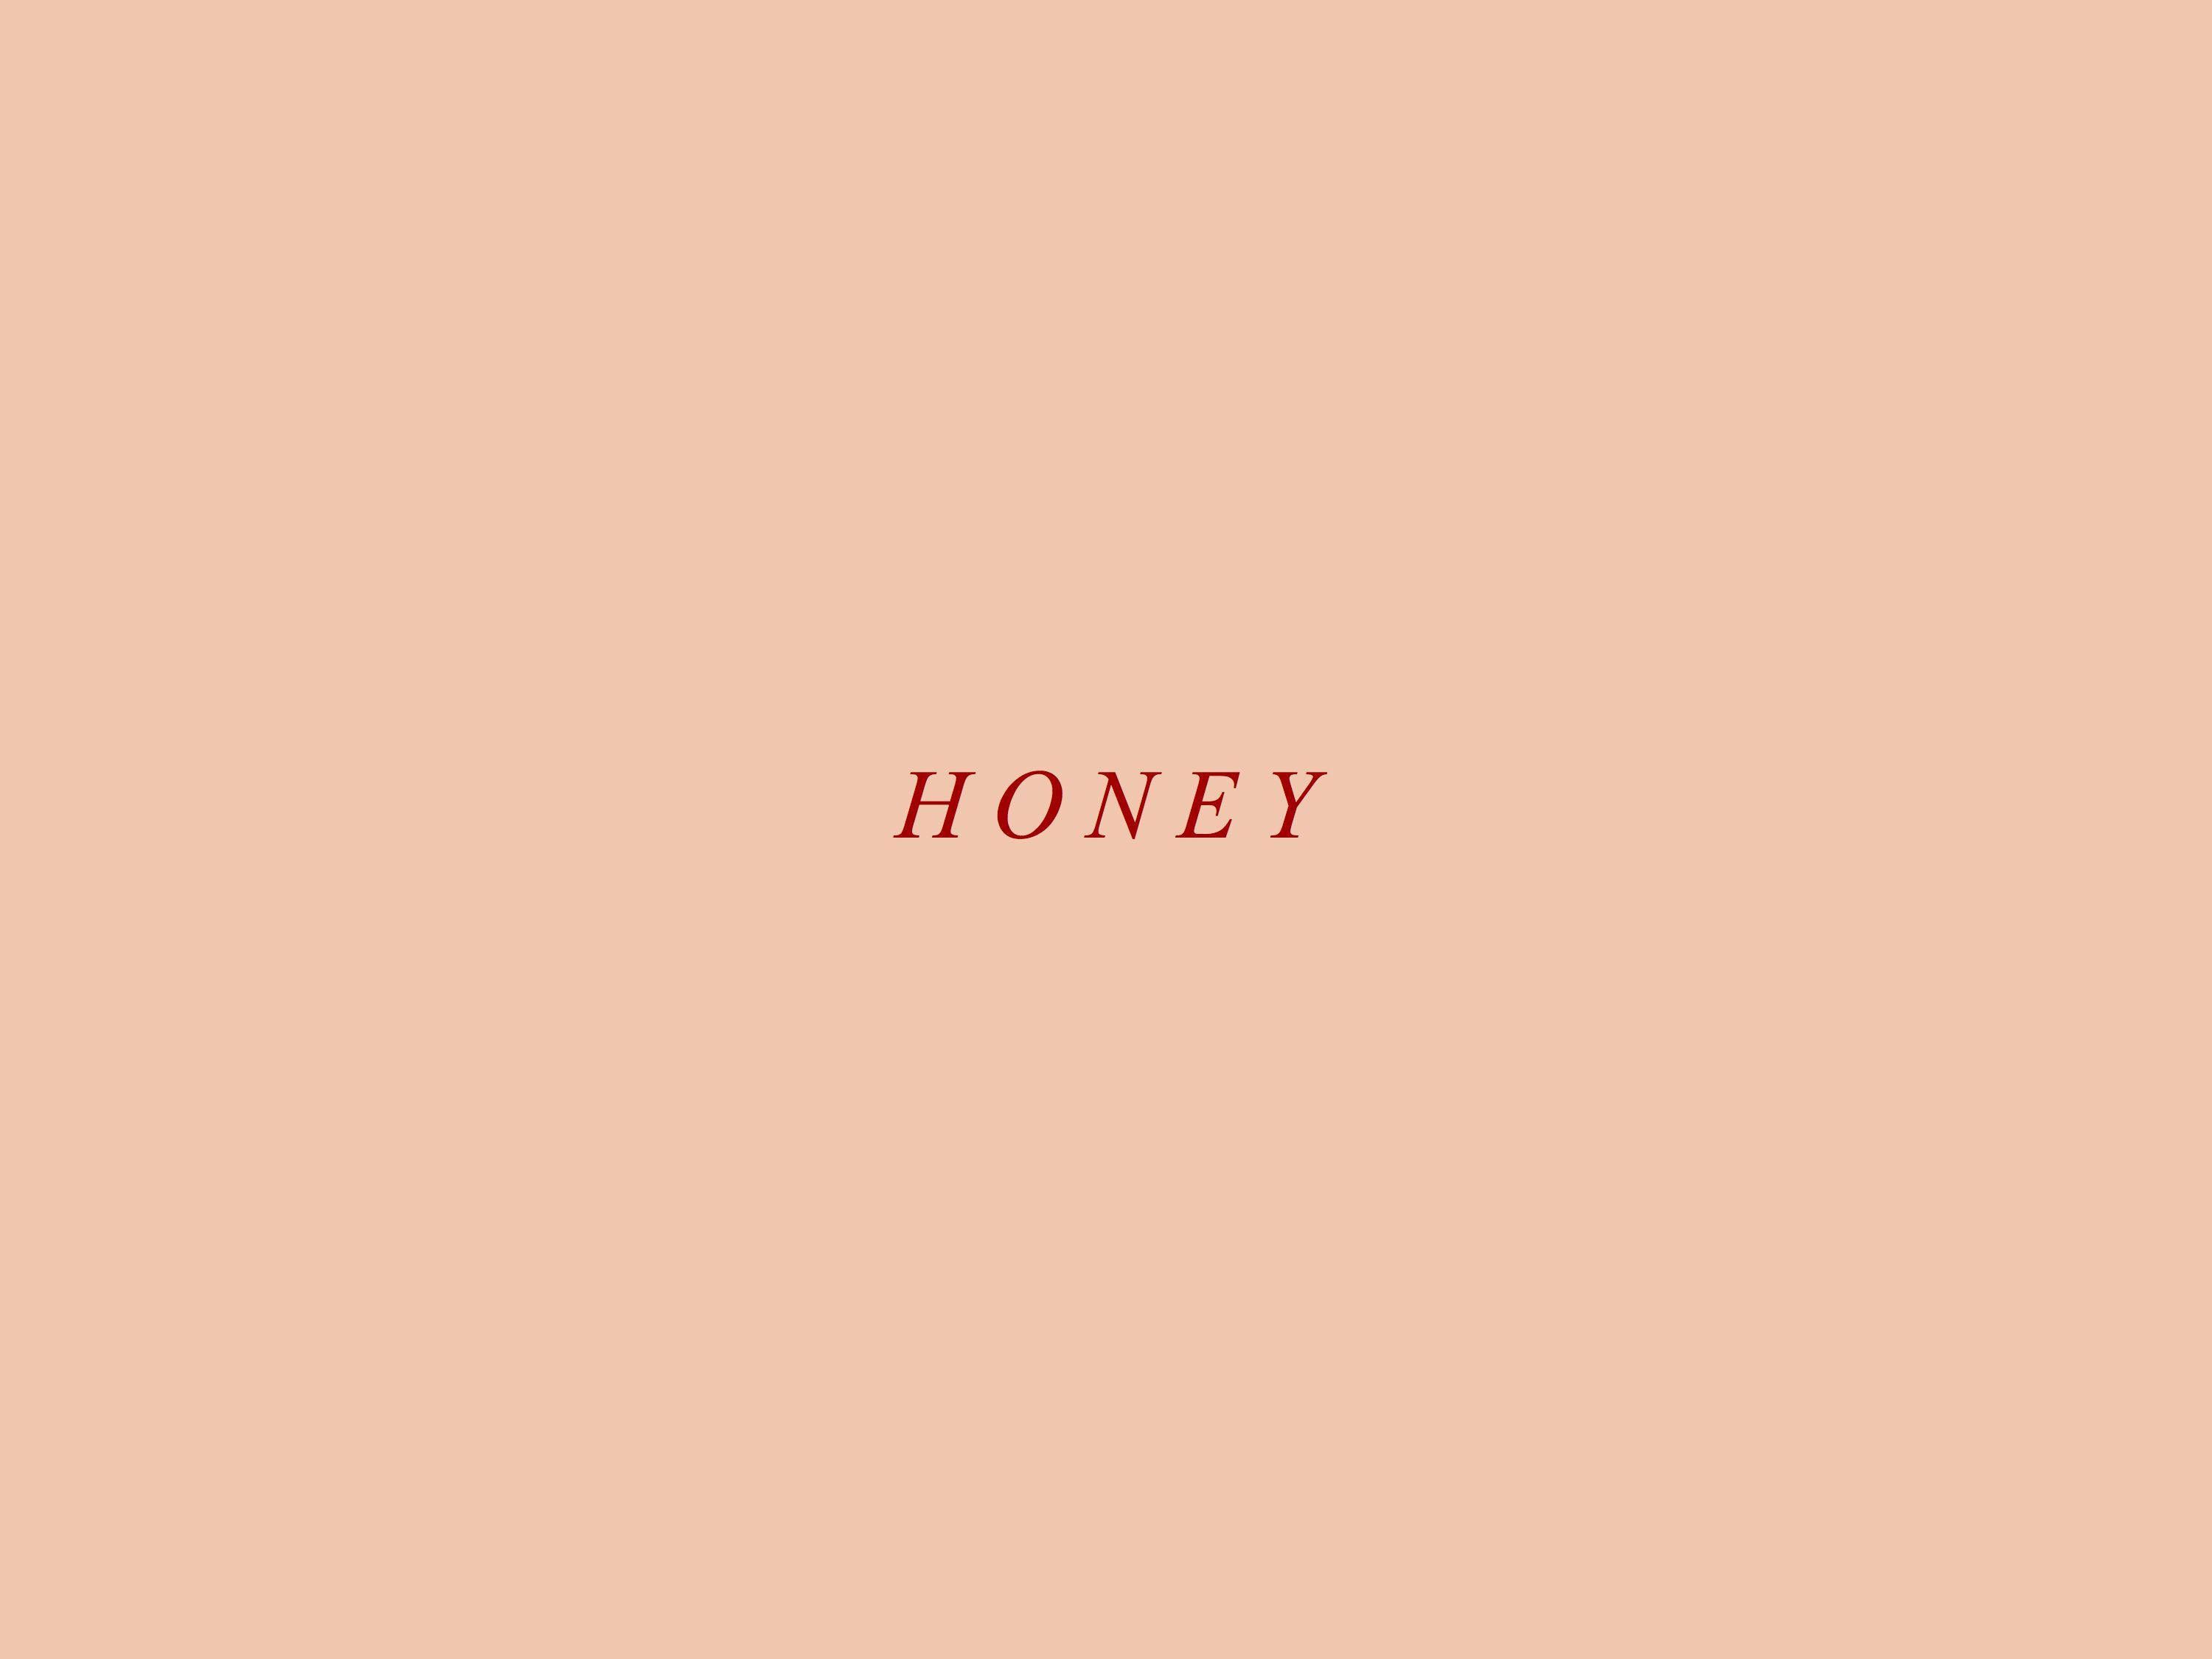 The honeybee logo - Honey